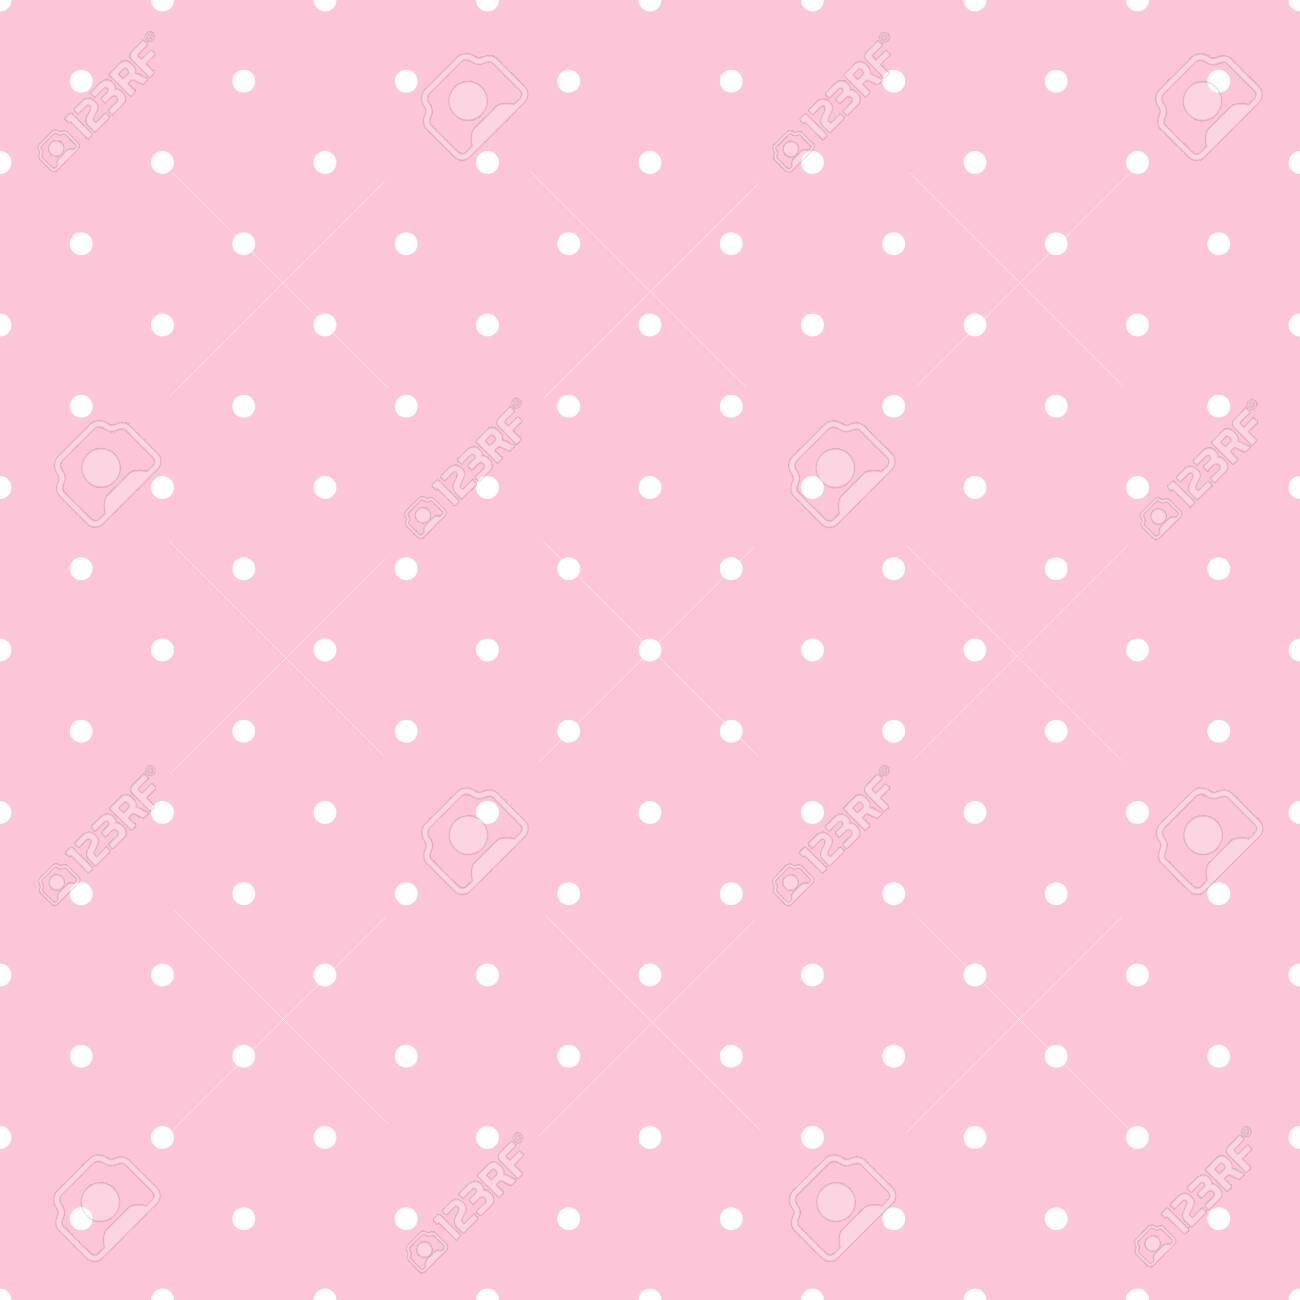 Seamless Vector Polka Dot Pattern White Little Dots On Pink